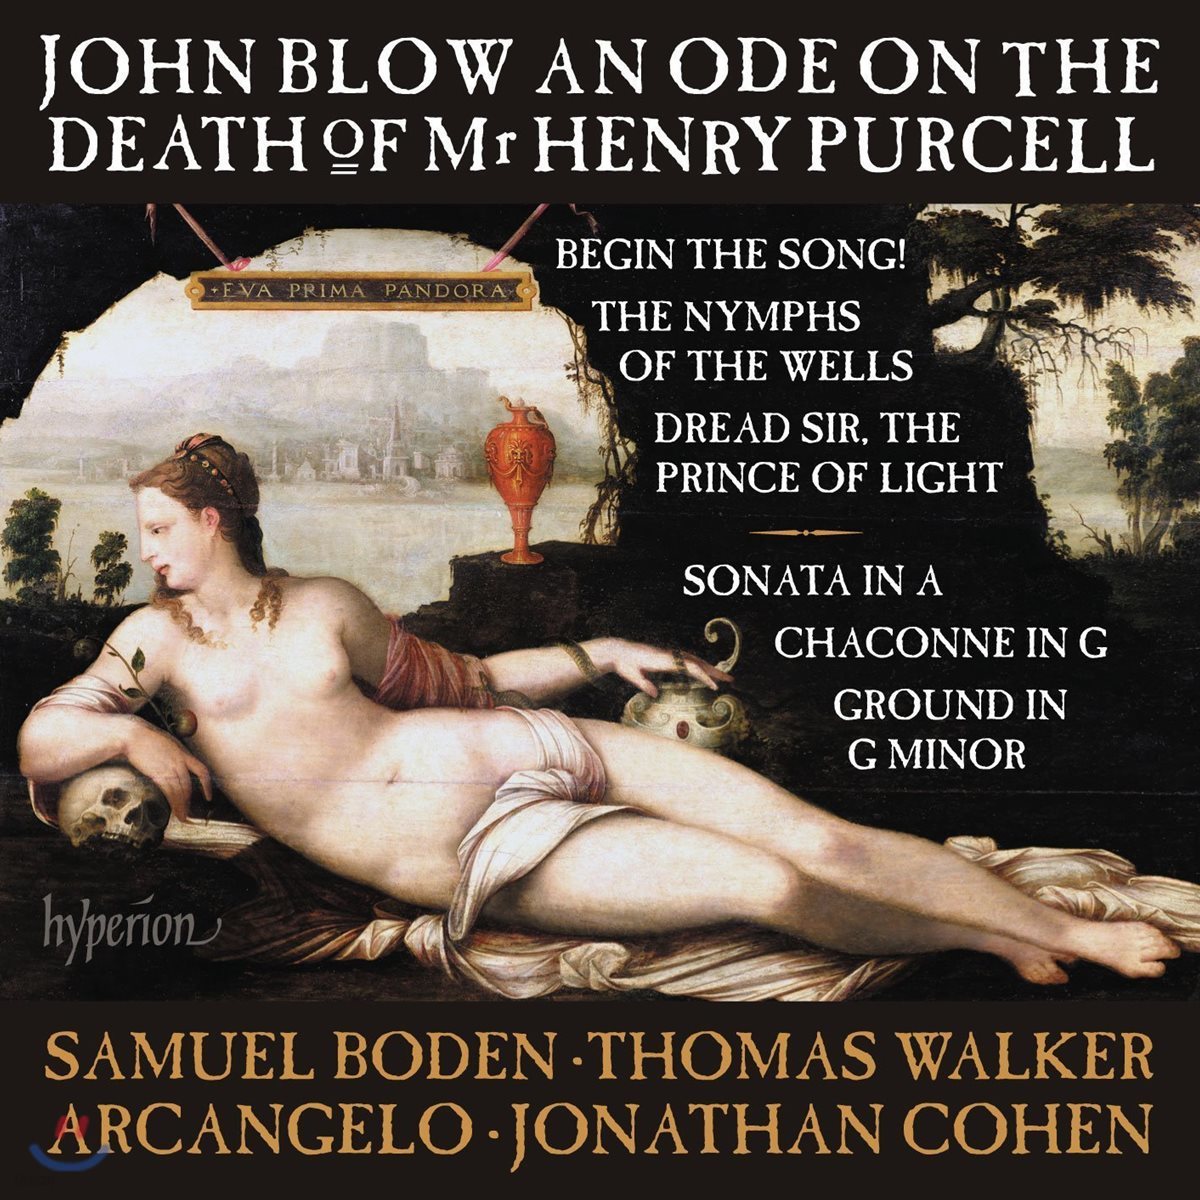 Arcangelo / Jonathan Cohen 존 블로우: 헨리 퍼셀의 죽음에 부치는 송가 외 - 아르칸젤로, 조나단 코엔 (John Blow: An Ode On The Death Of Mr Henry Purcell)